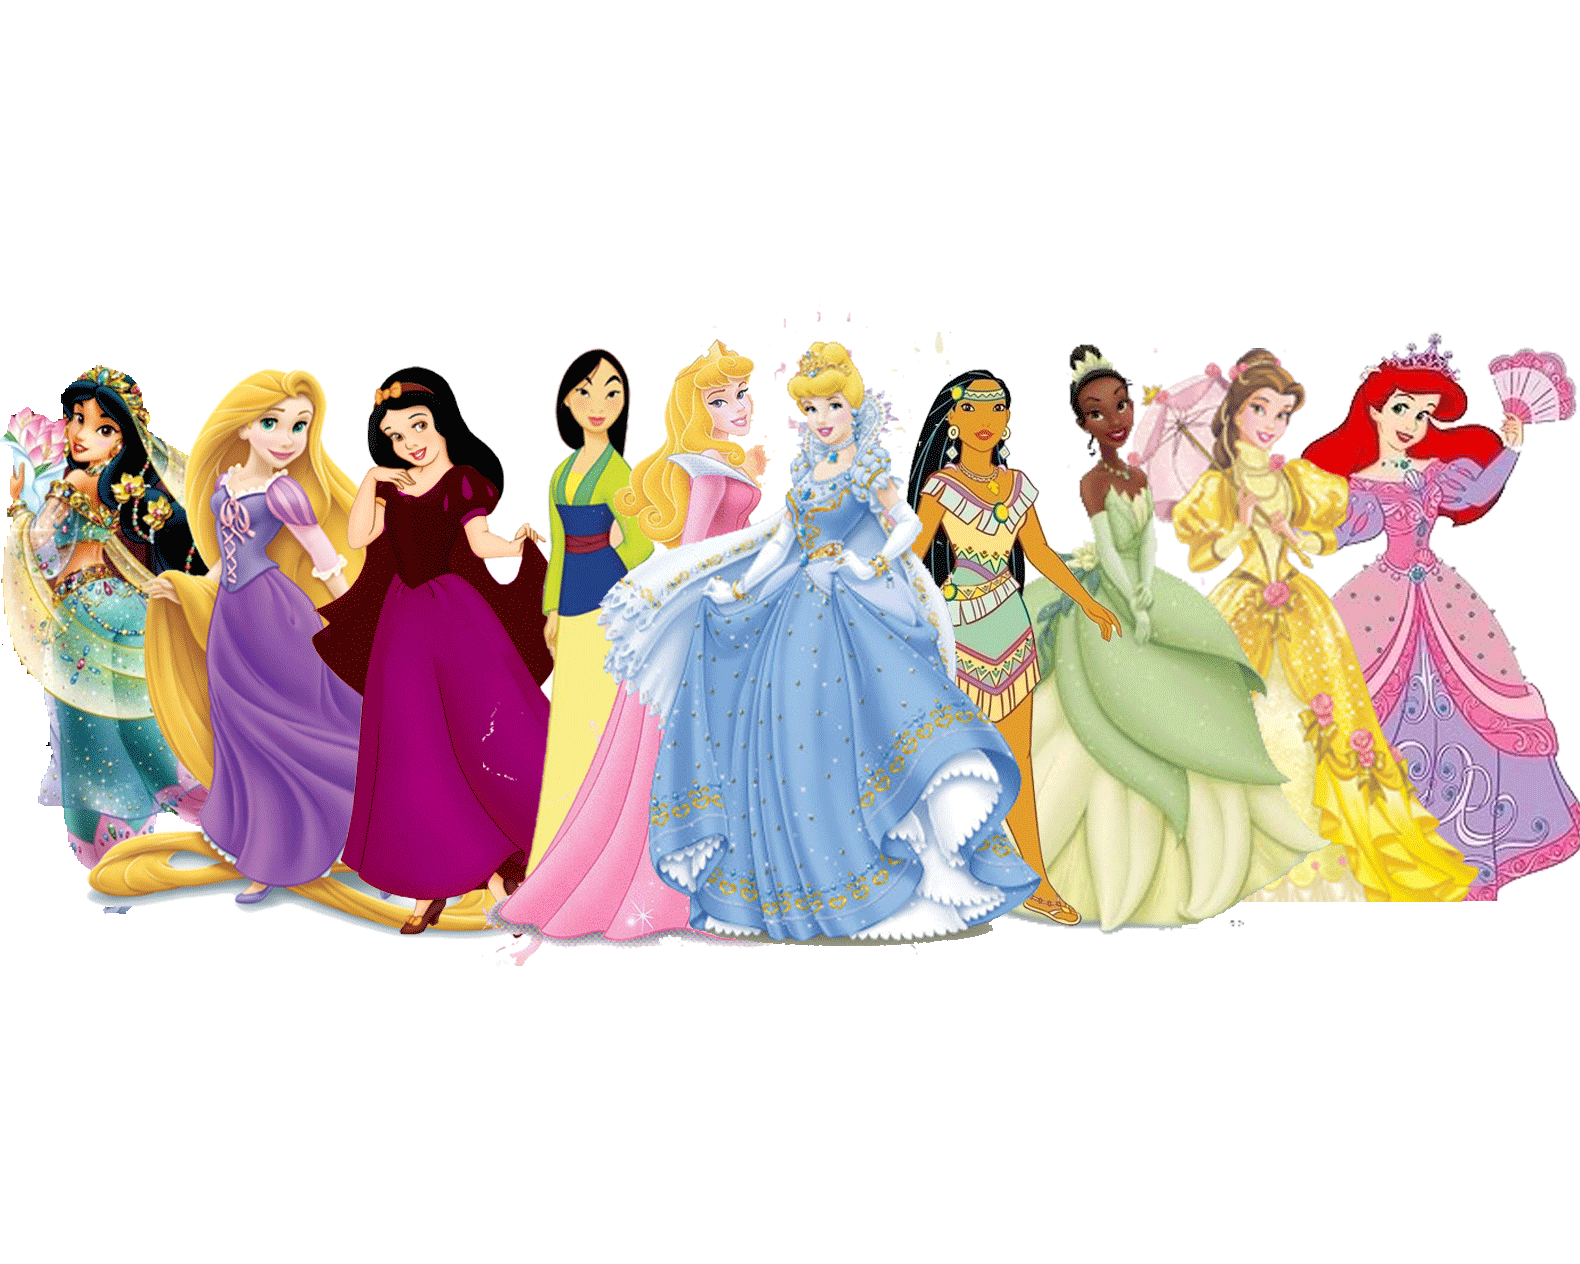  Disney Princess desktop image Disney Princess desktop wallpaper